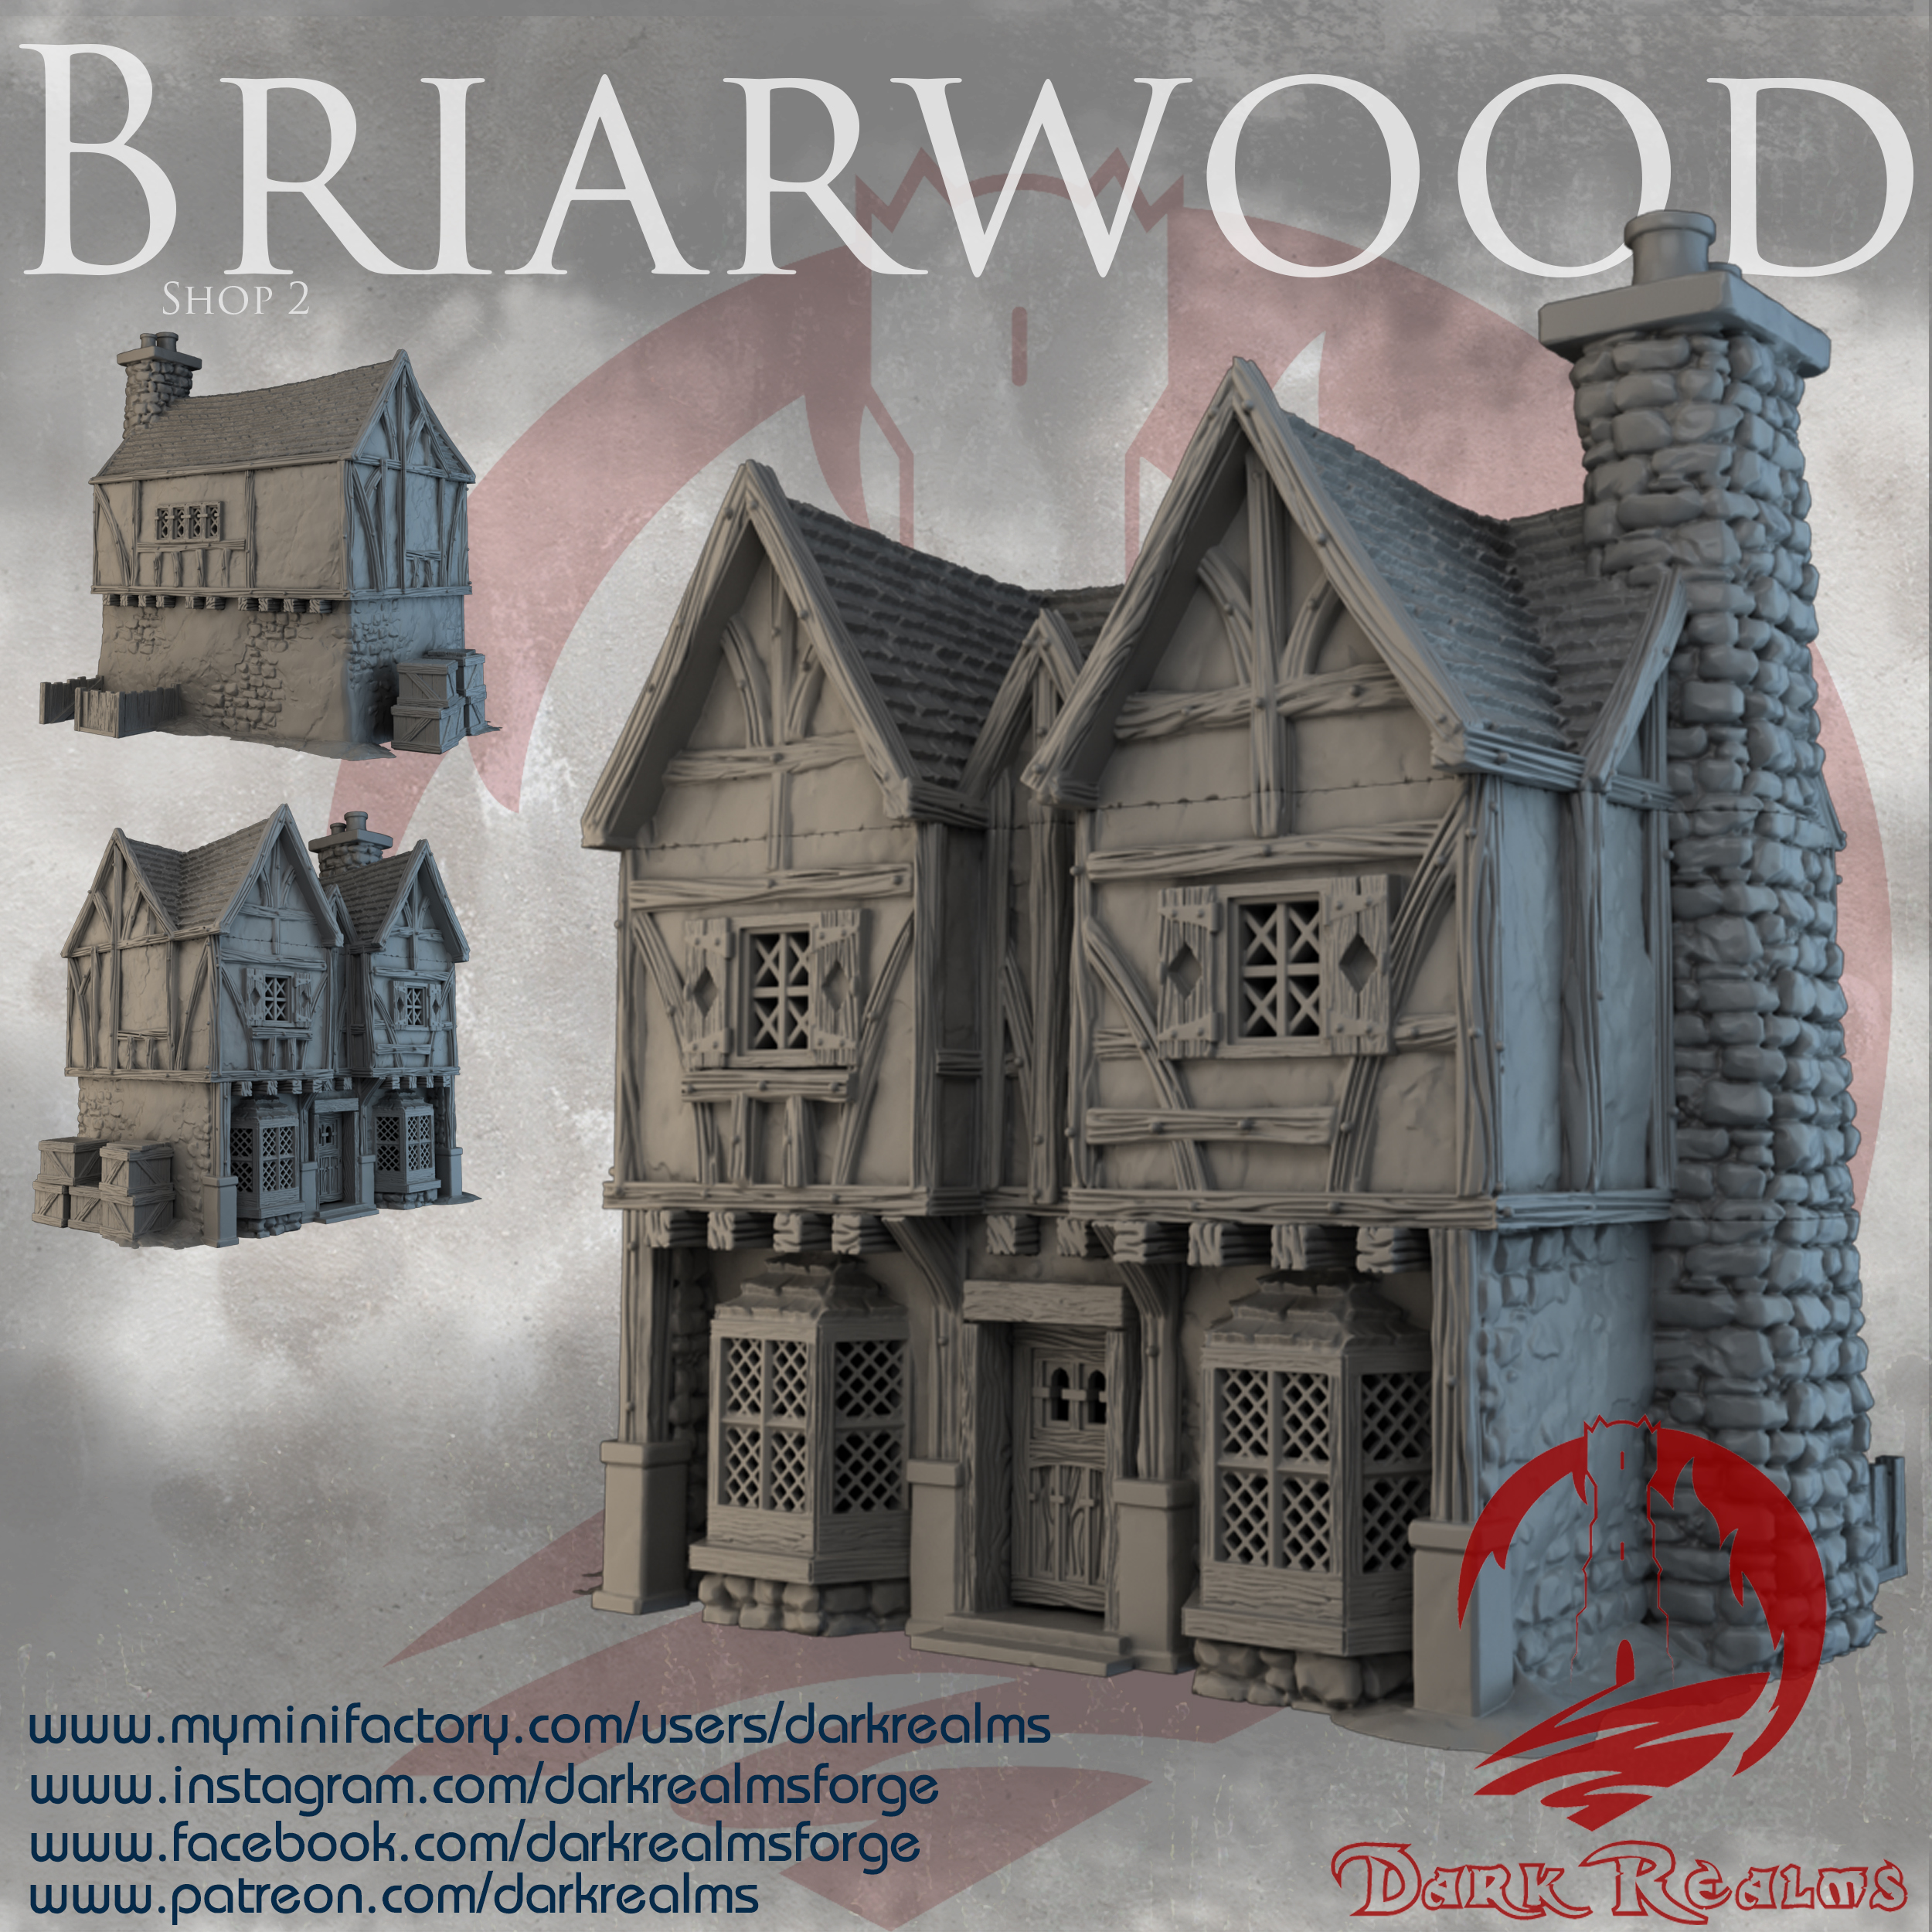 Briarwood - Shop 2